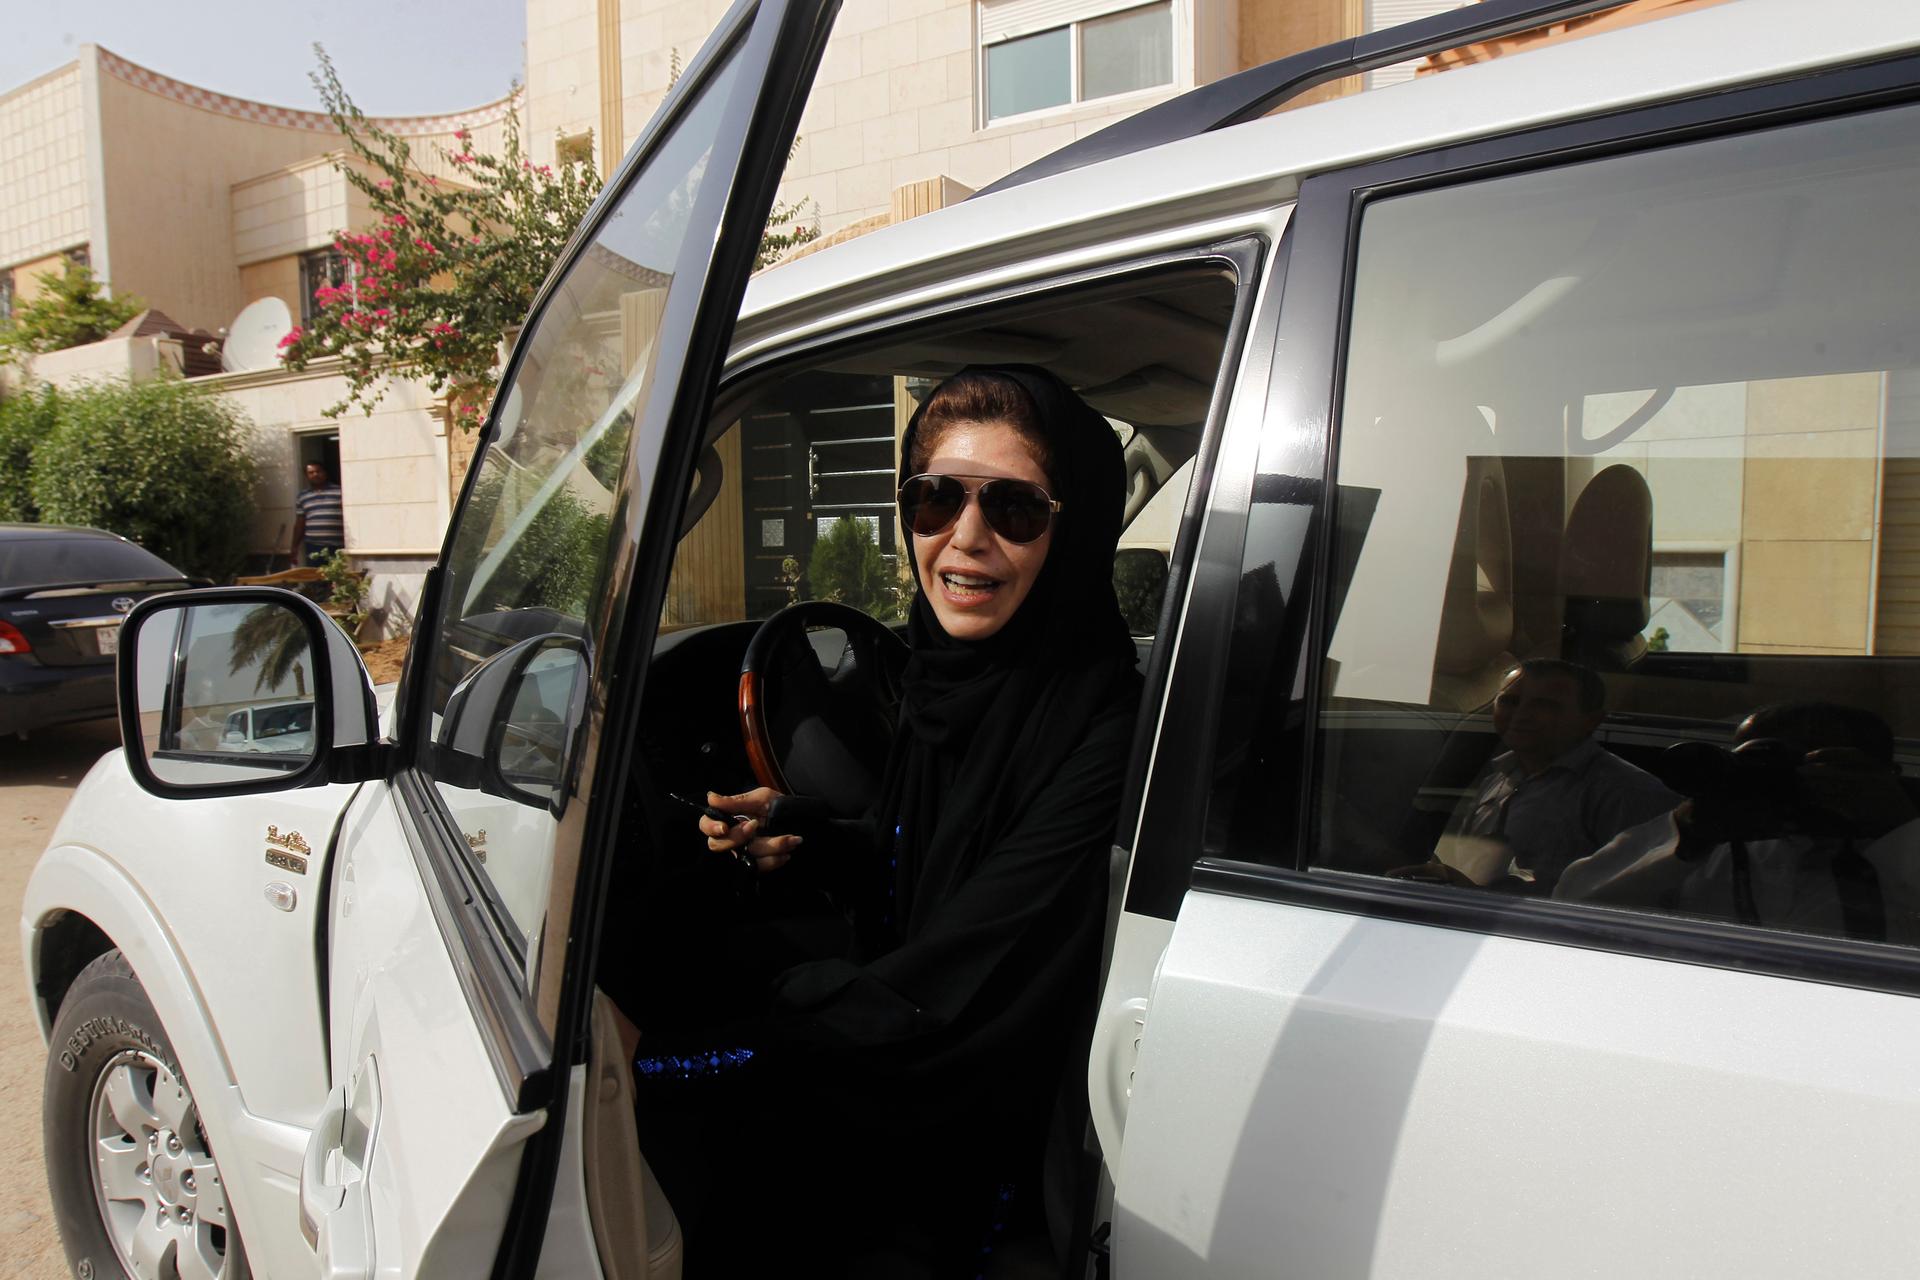 Azza Al Shmasani alights from her car after driving in defiance of the ban in Riyadh, Saudi Arabia in 2011.